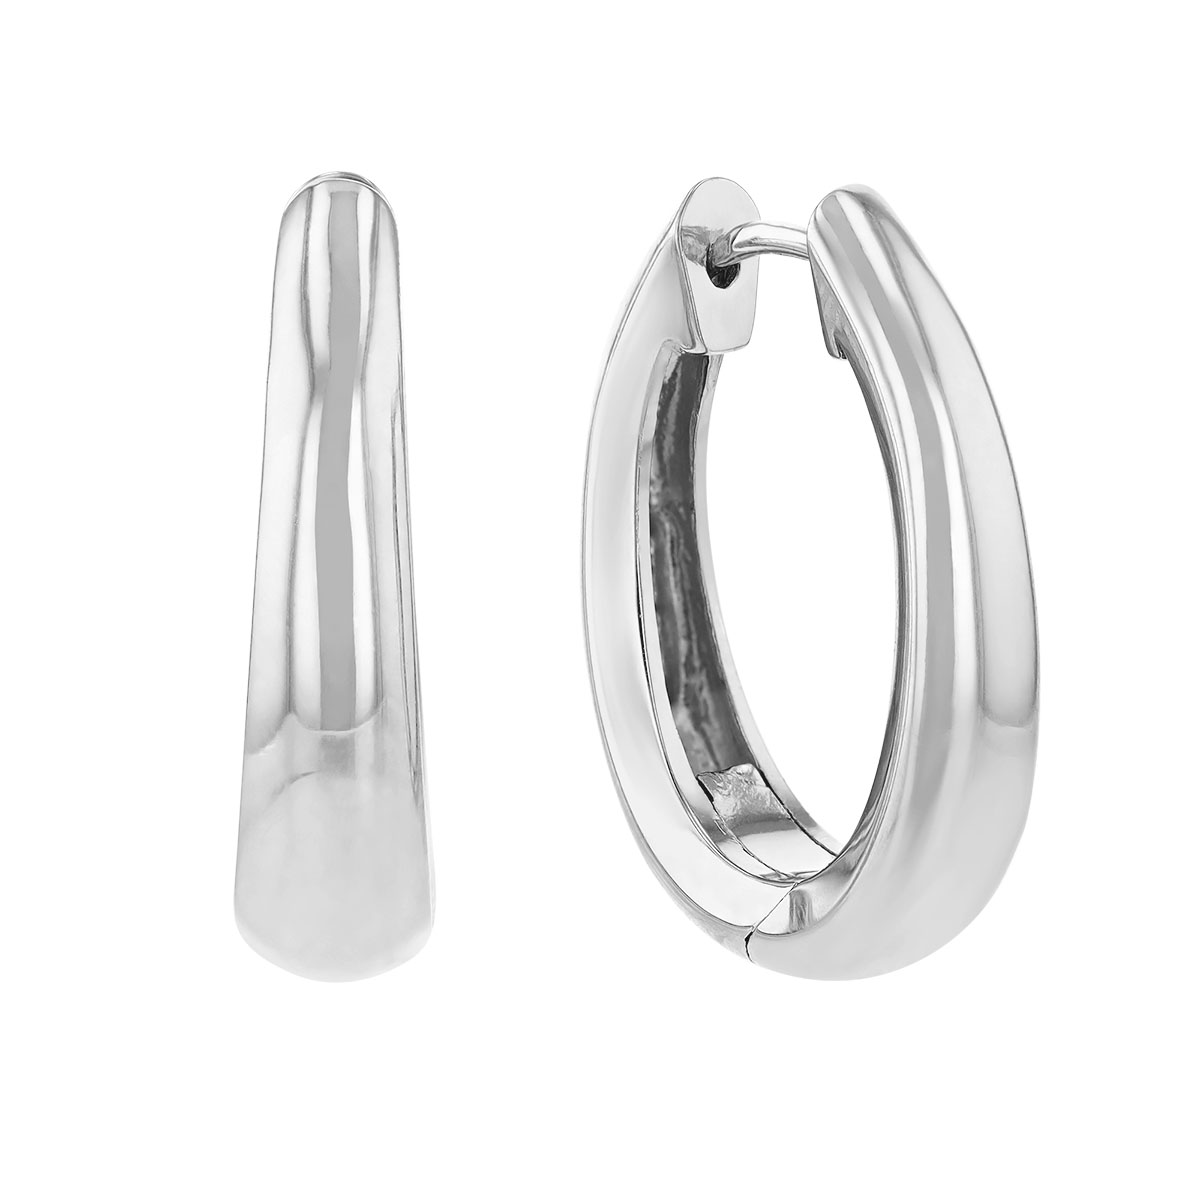 Sterling Silver Oval Hoop Earrings, 24mm